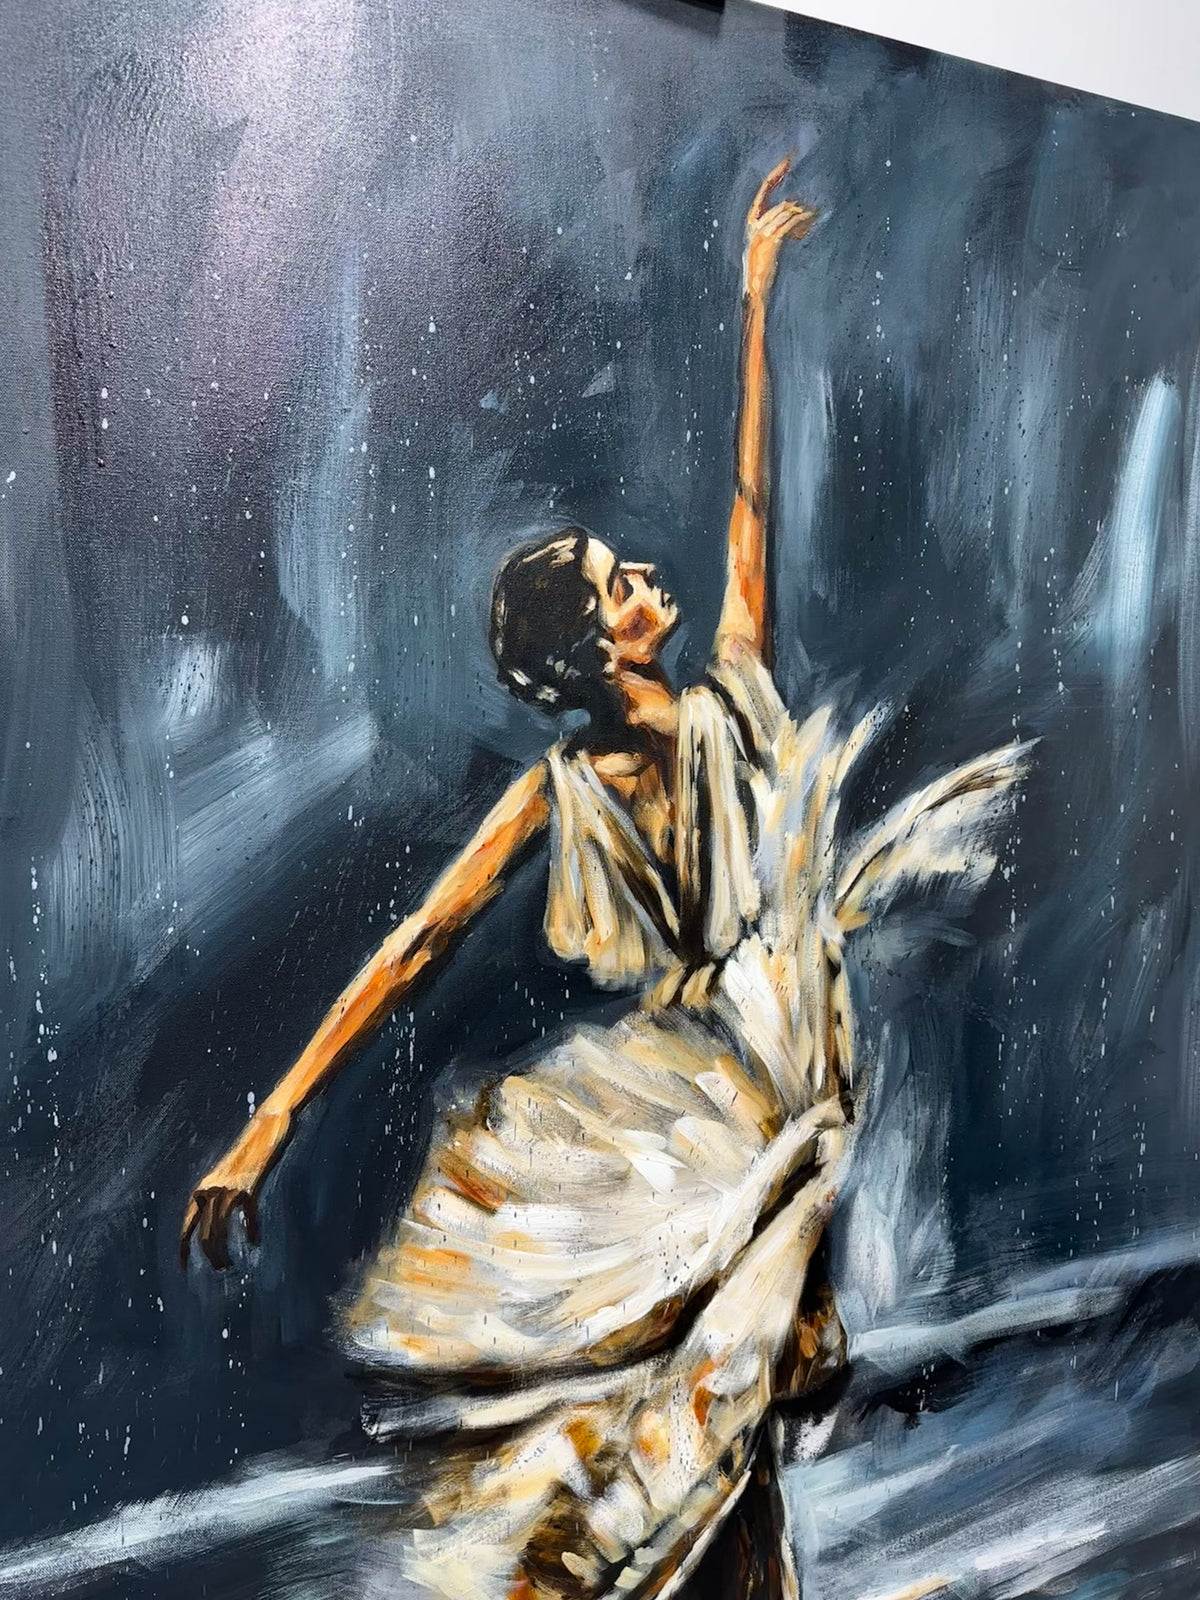 I’ll Praise You Through the Storm - 48”x60” Original Acrylic Painting